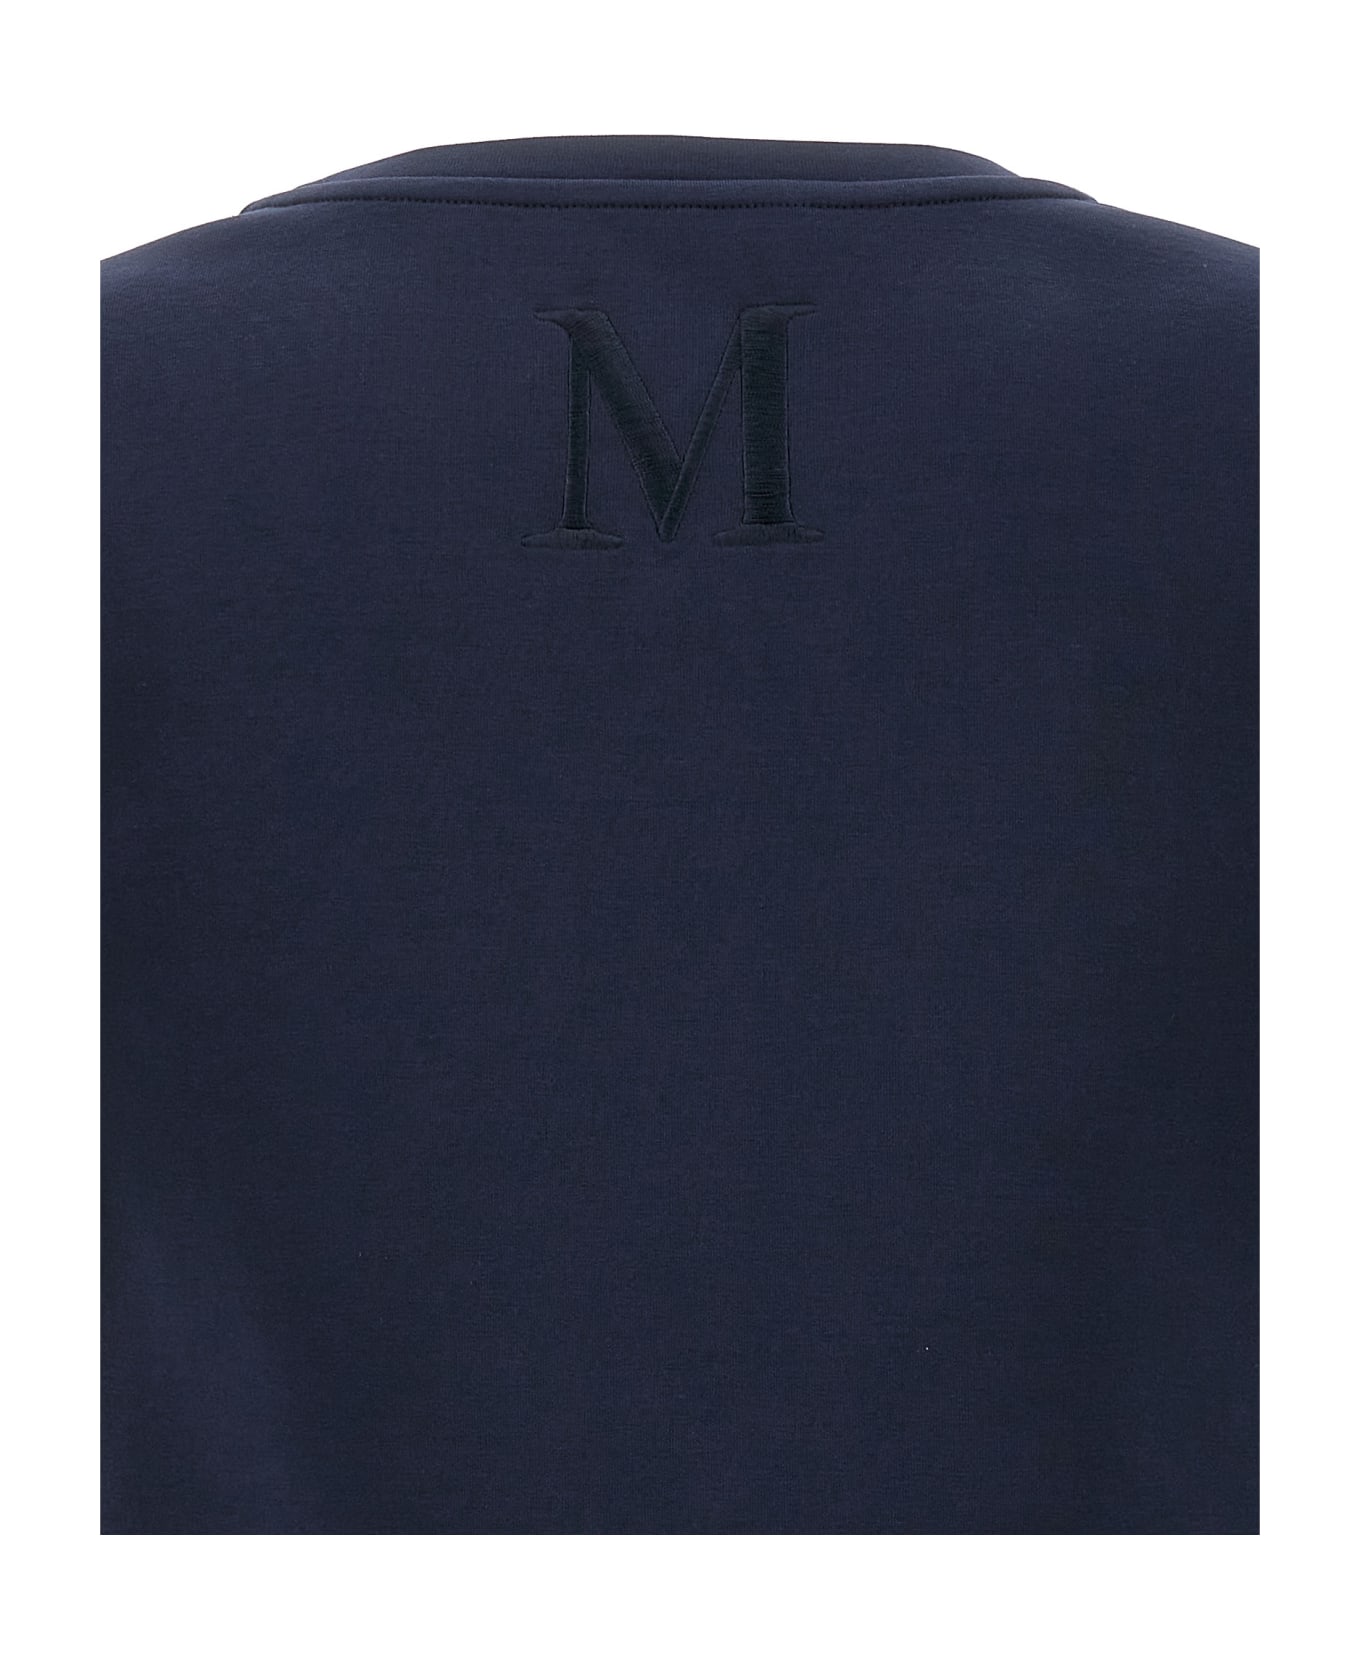 'S Max Mara 'fianco' T-shirt - Blue